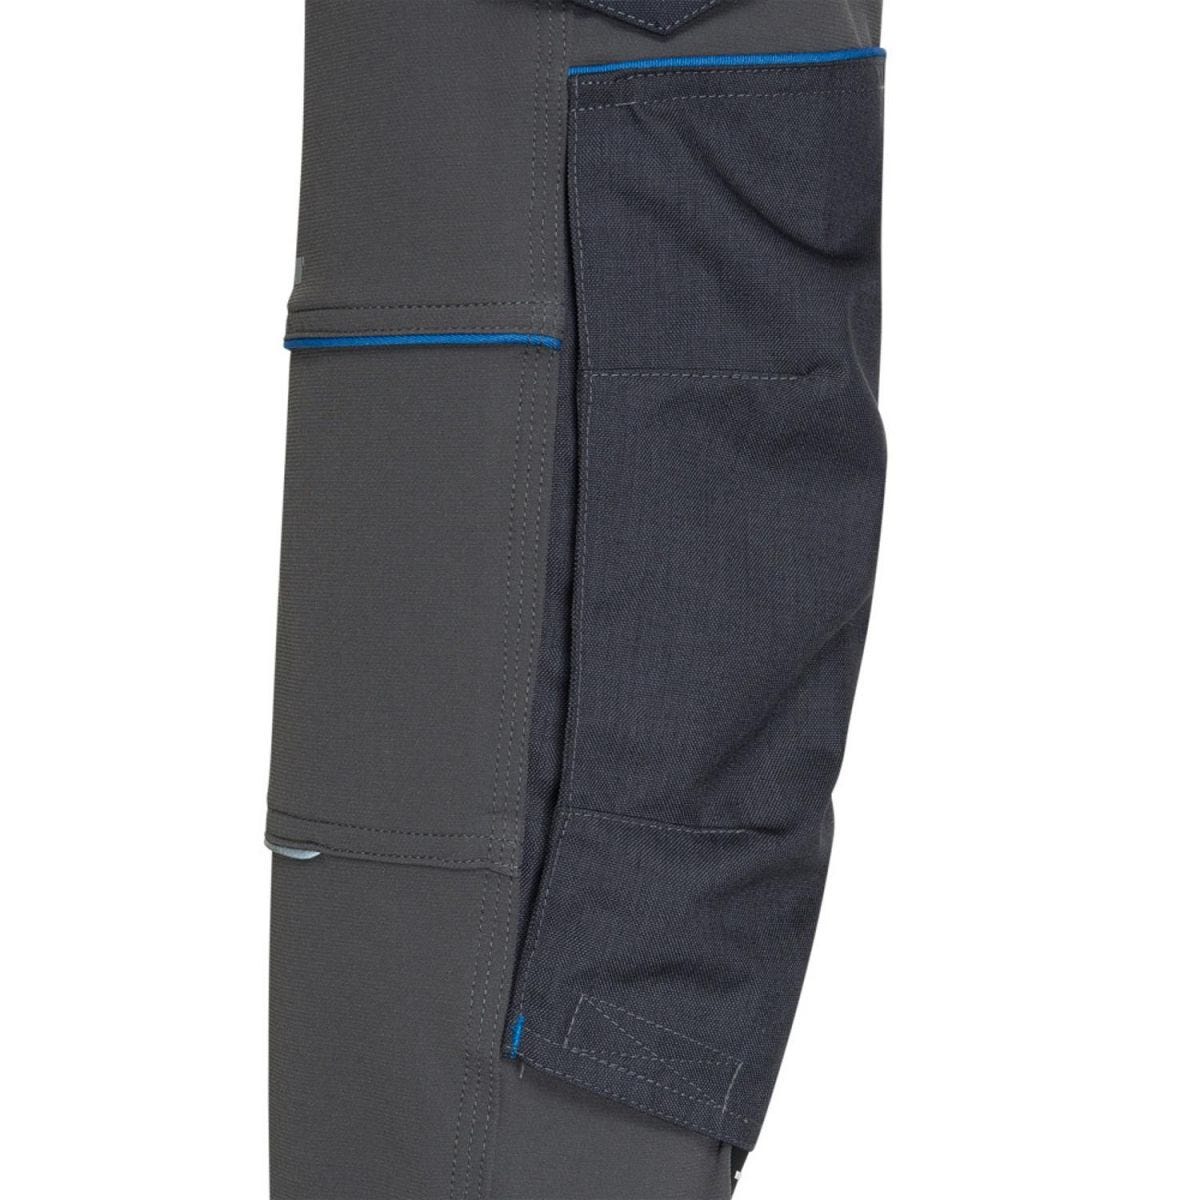 Pantalon de travail SACHA gris/bleu - North Ways - Taille 40 4